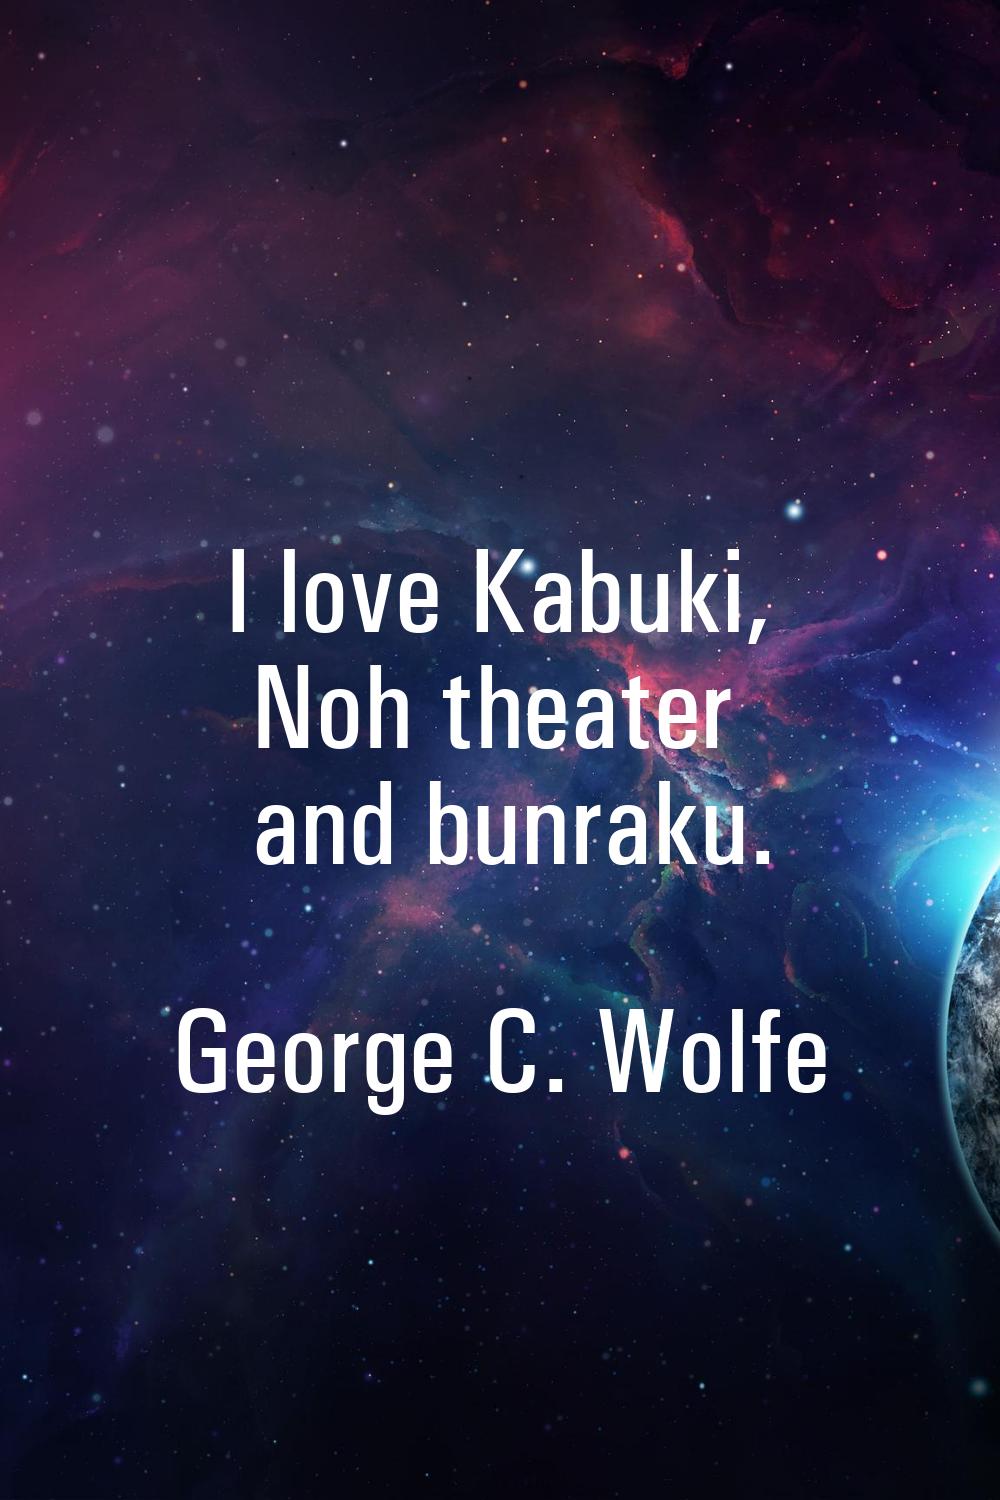 I love Kabuki, Noh theater and bunraku.